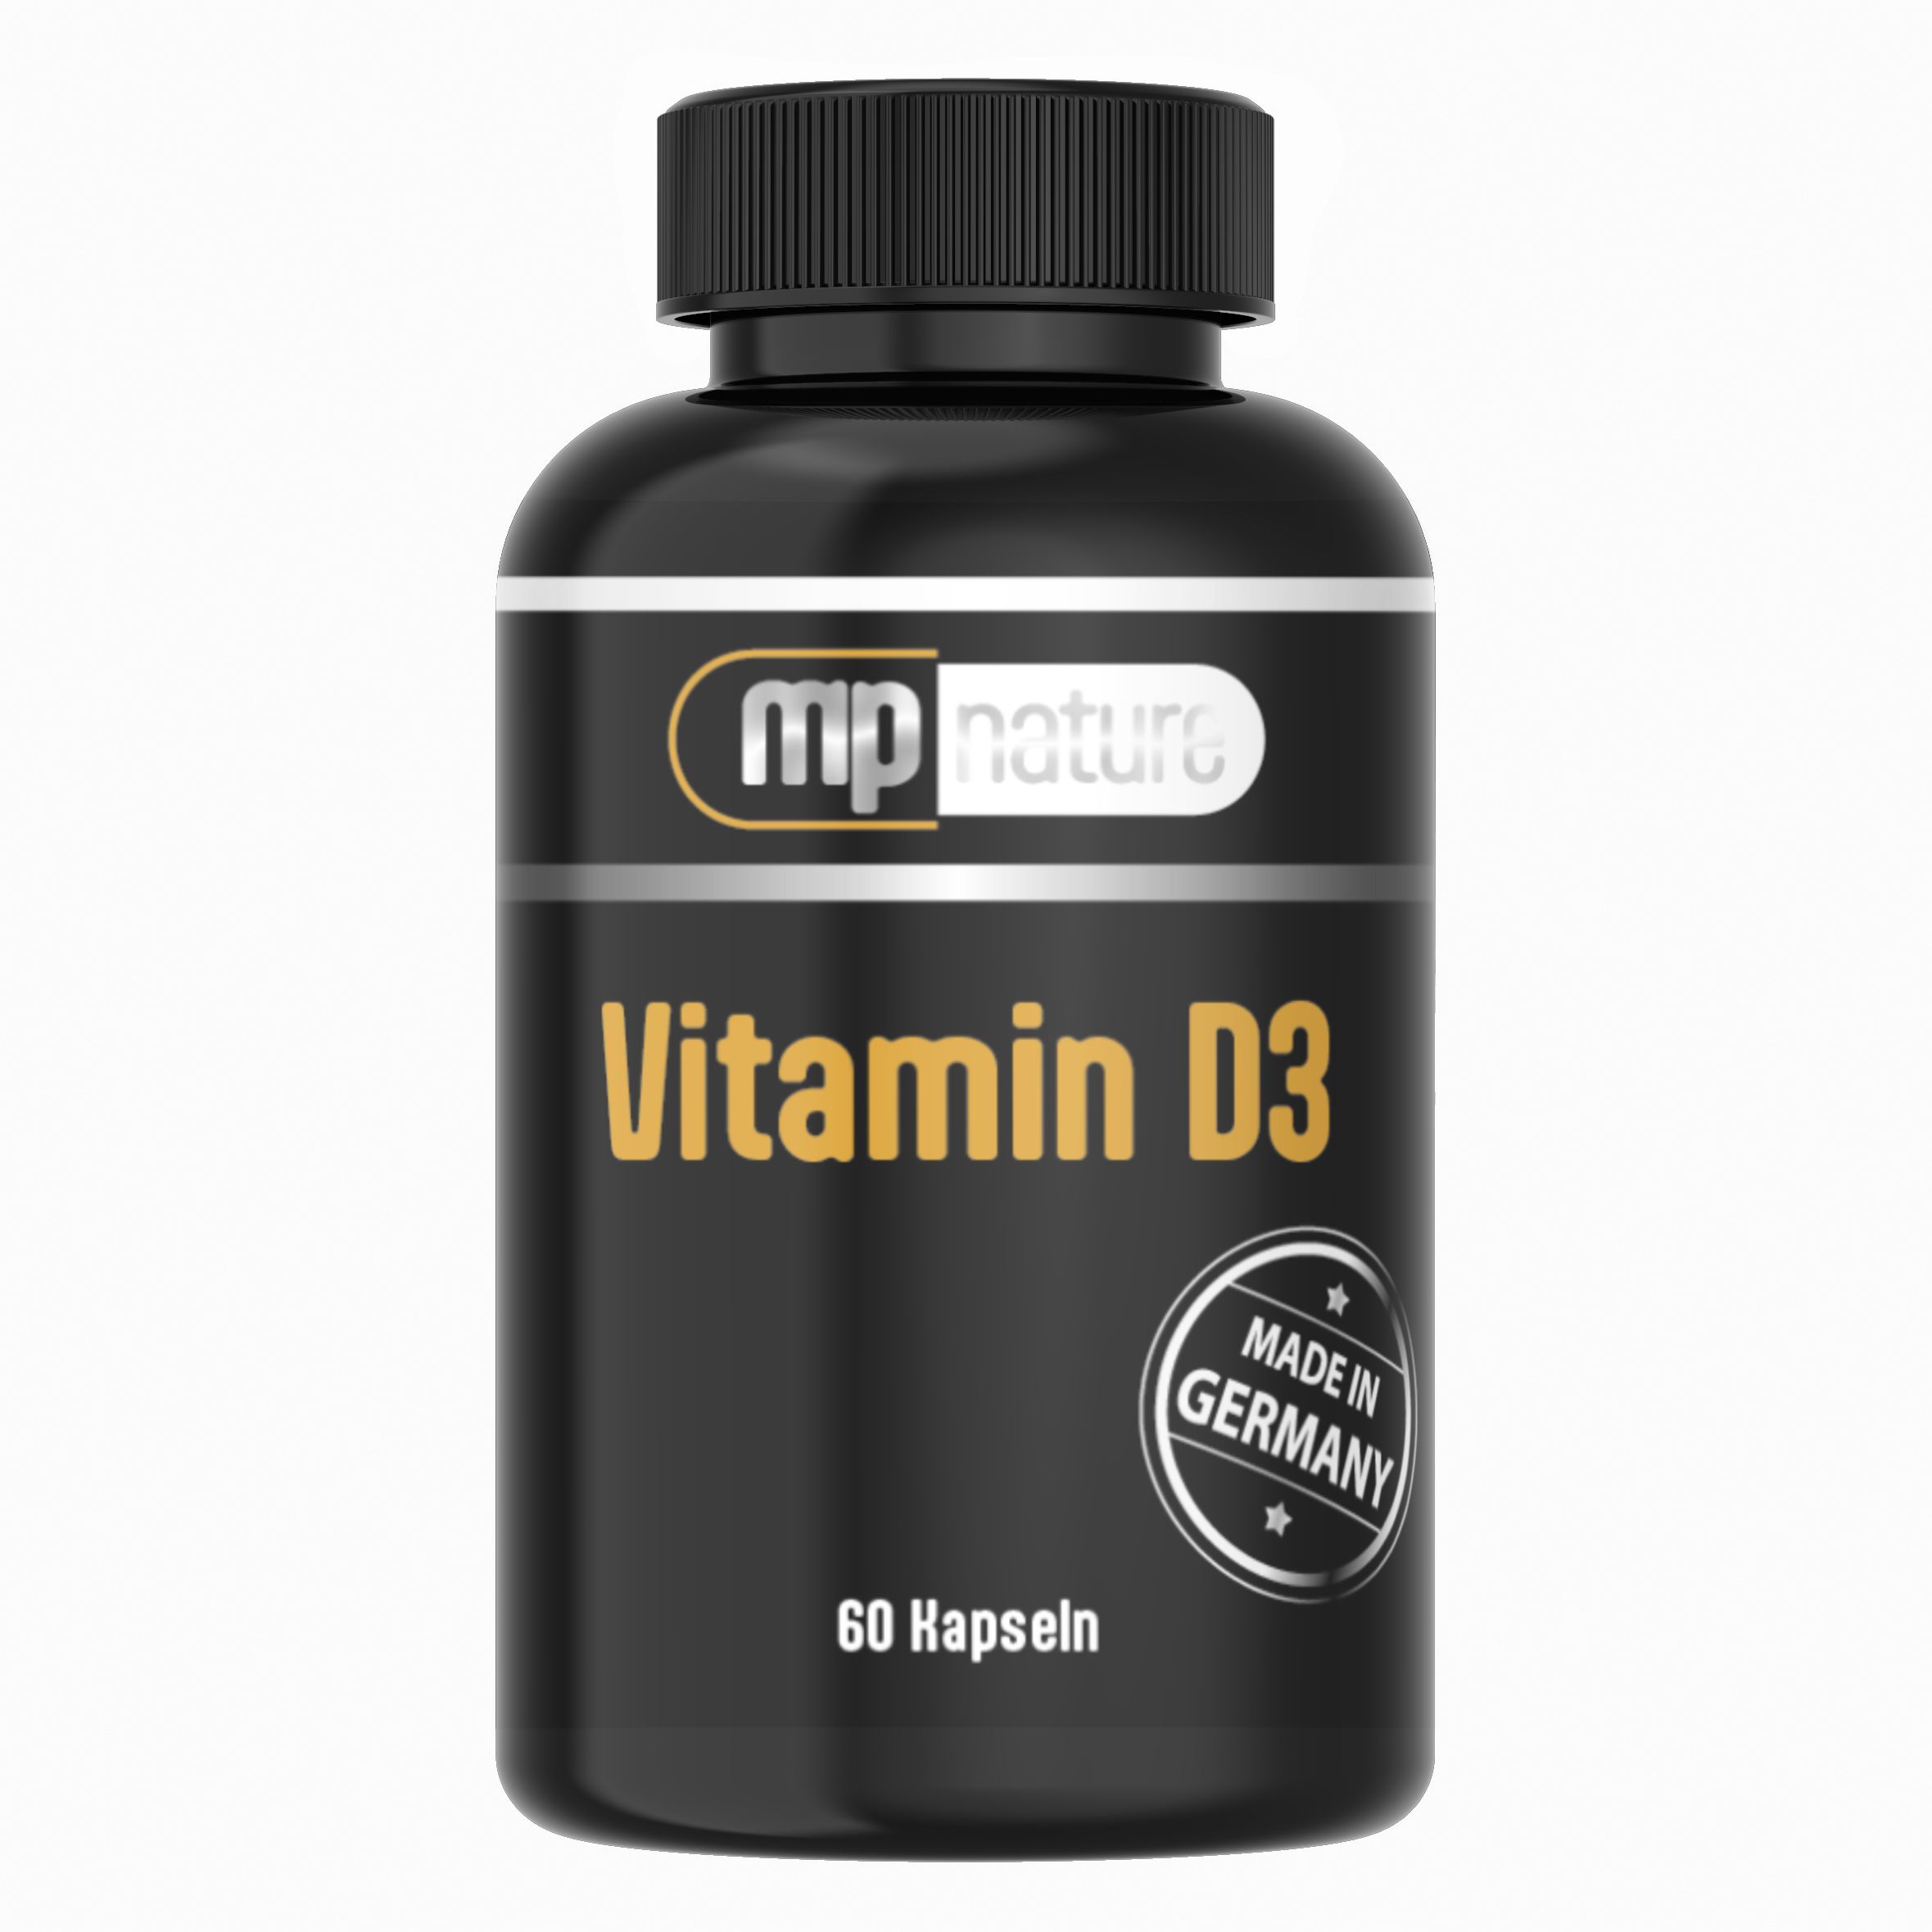 MP Nature Vitamin D3